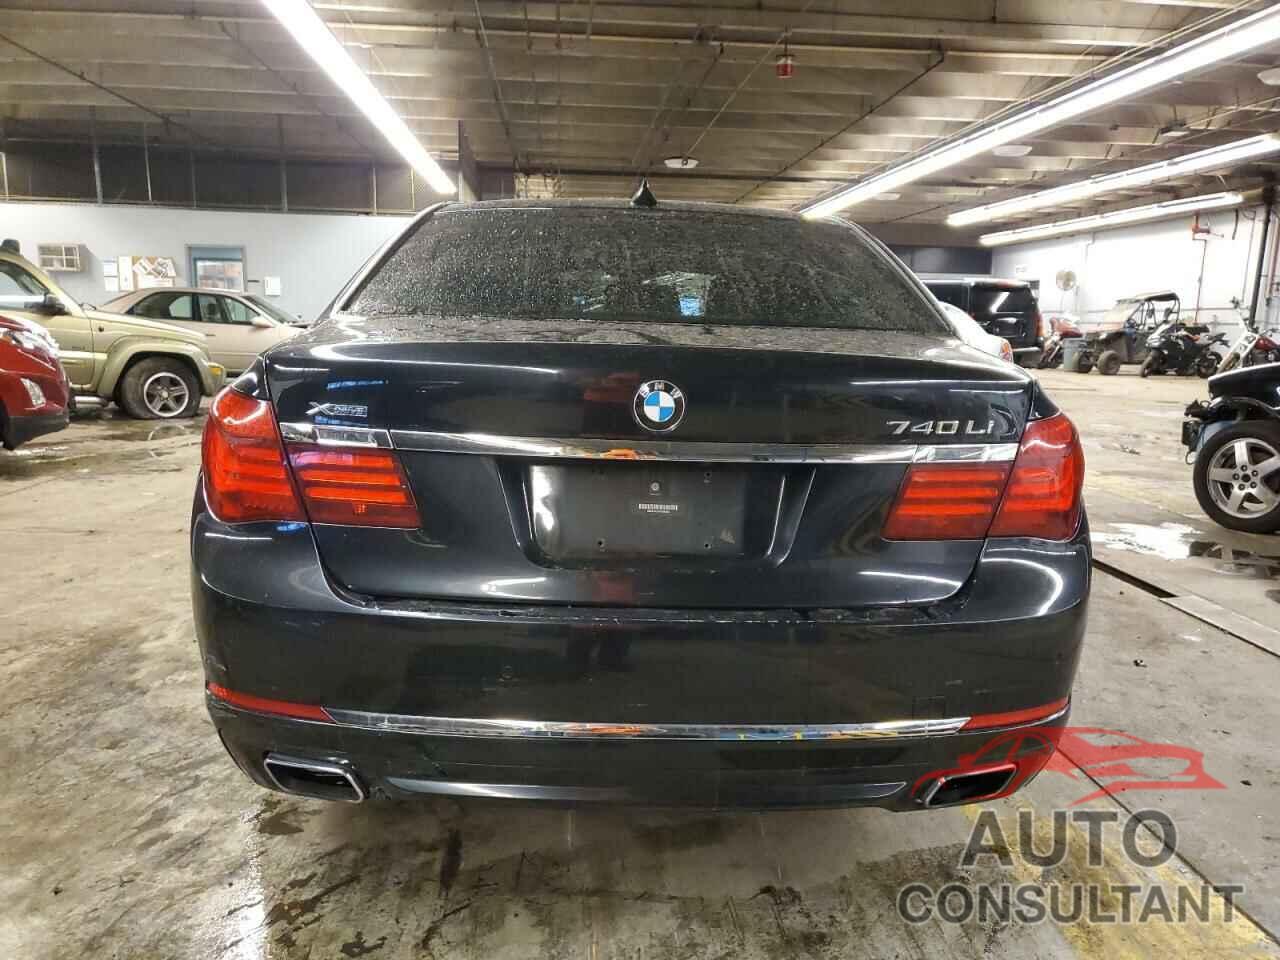 BMW 7 SERIES 2015 - WBAYF4C50FGS99082